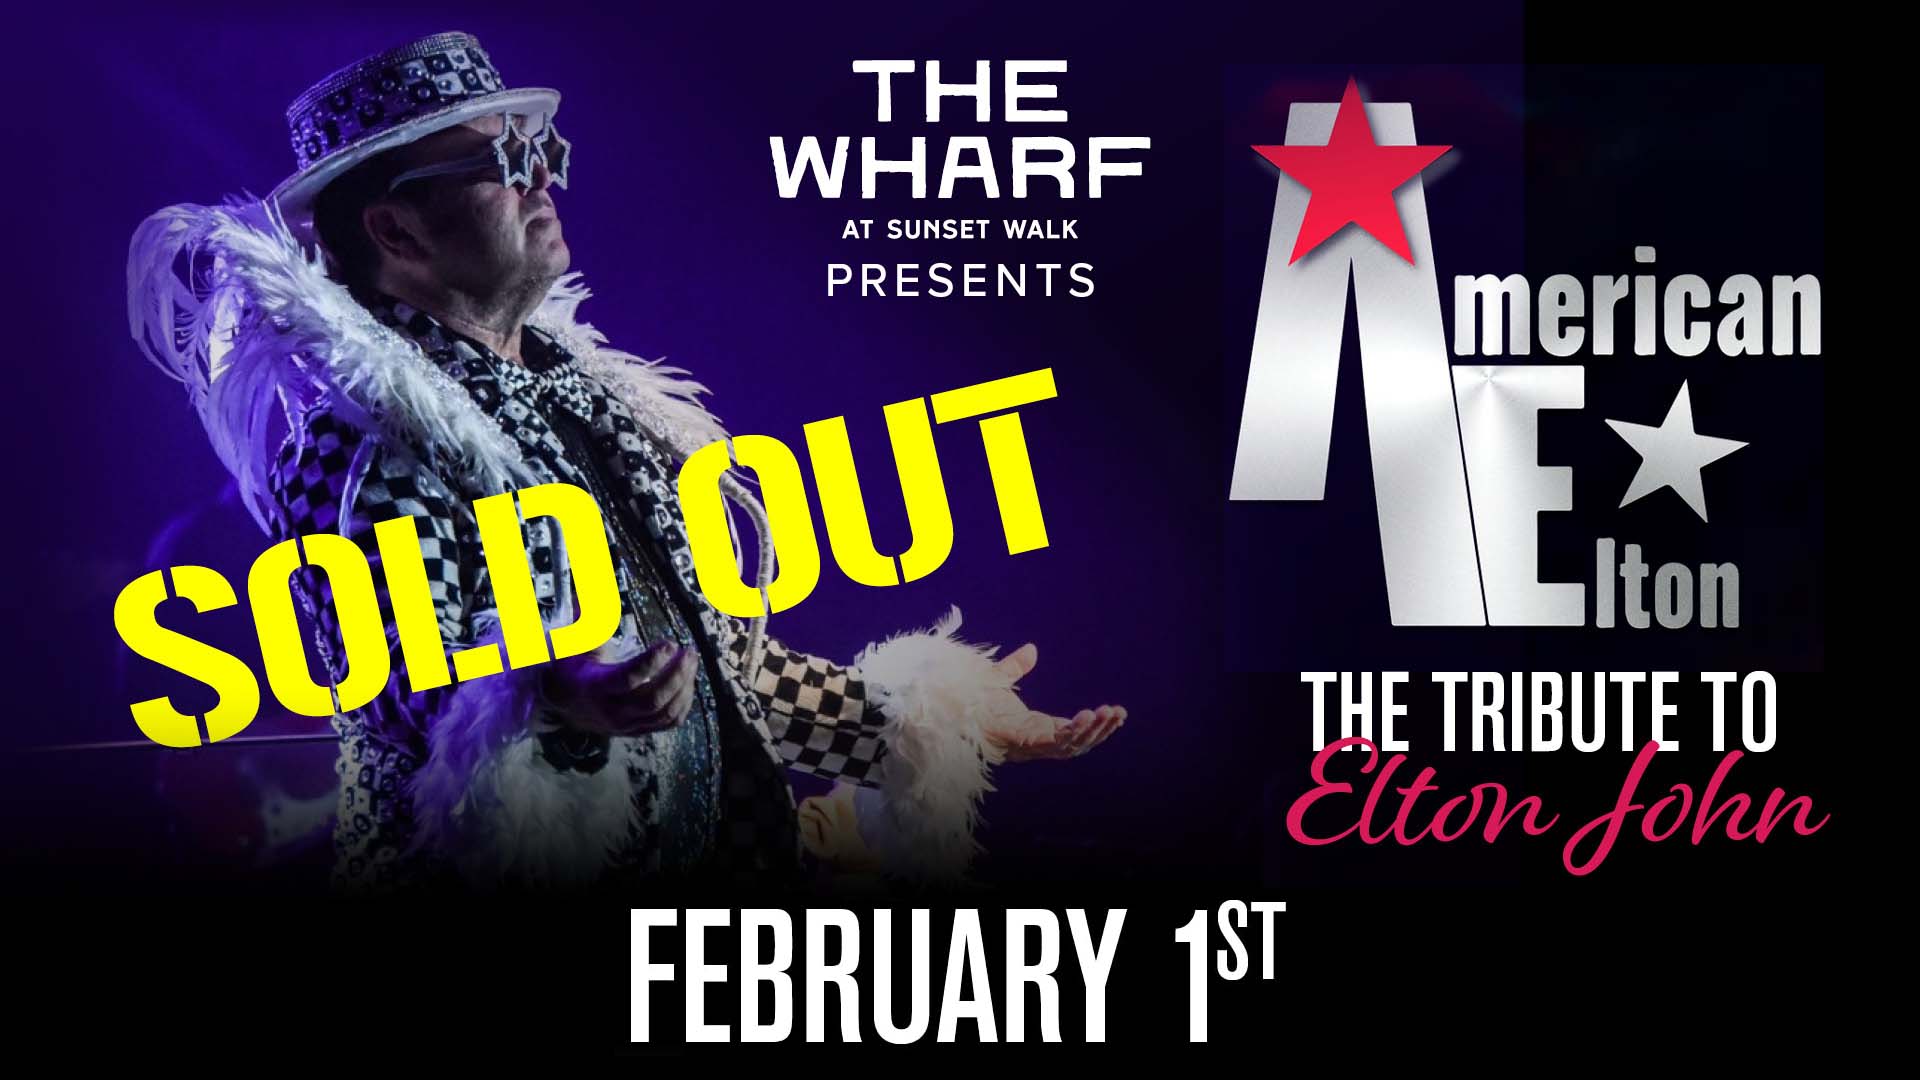 American Elton: The Tribute to Elton John, February 1 at The Wharf